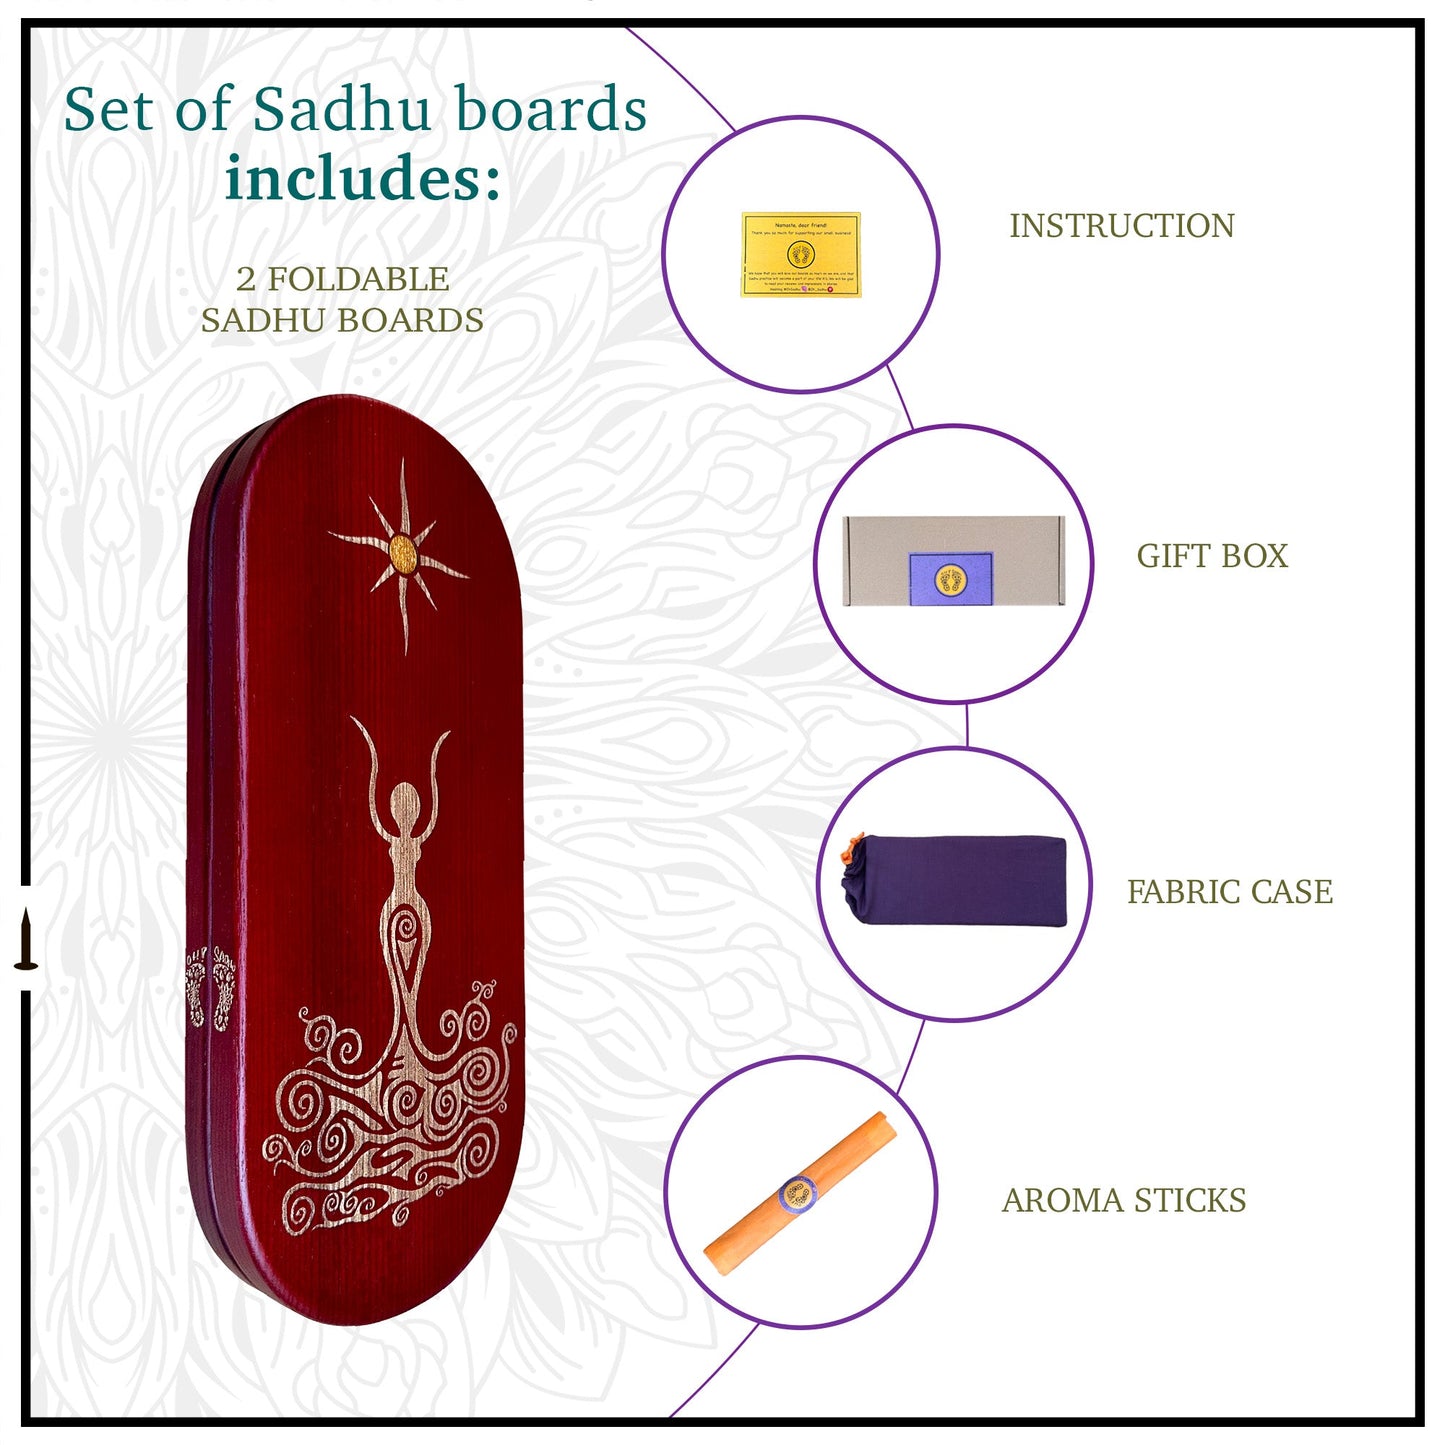 sadhu board set includes